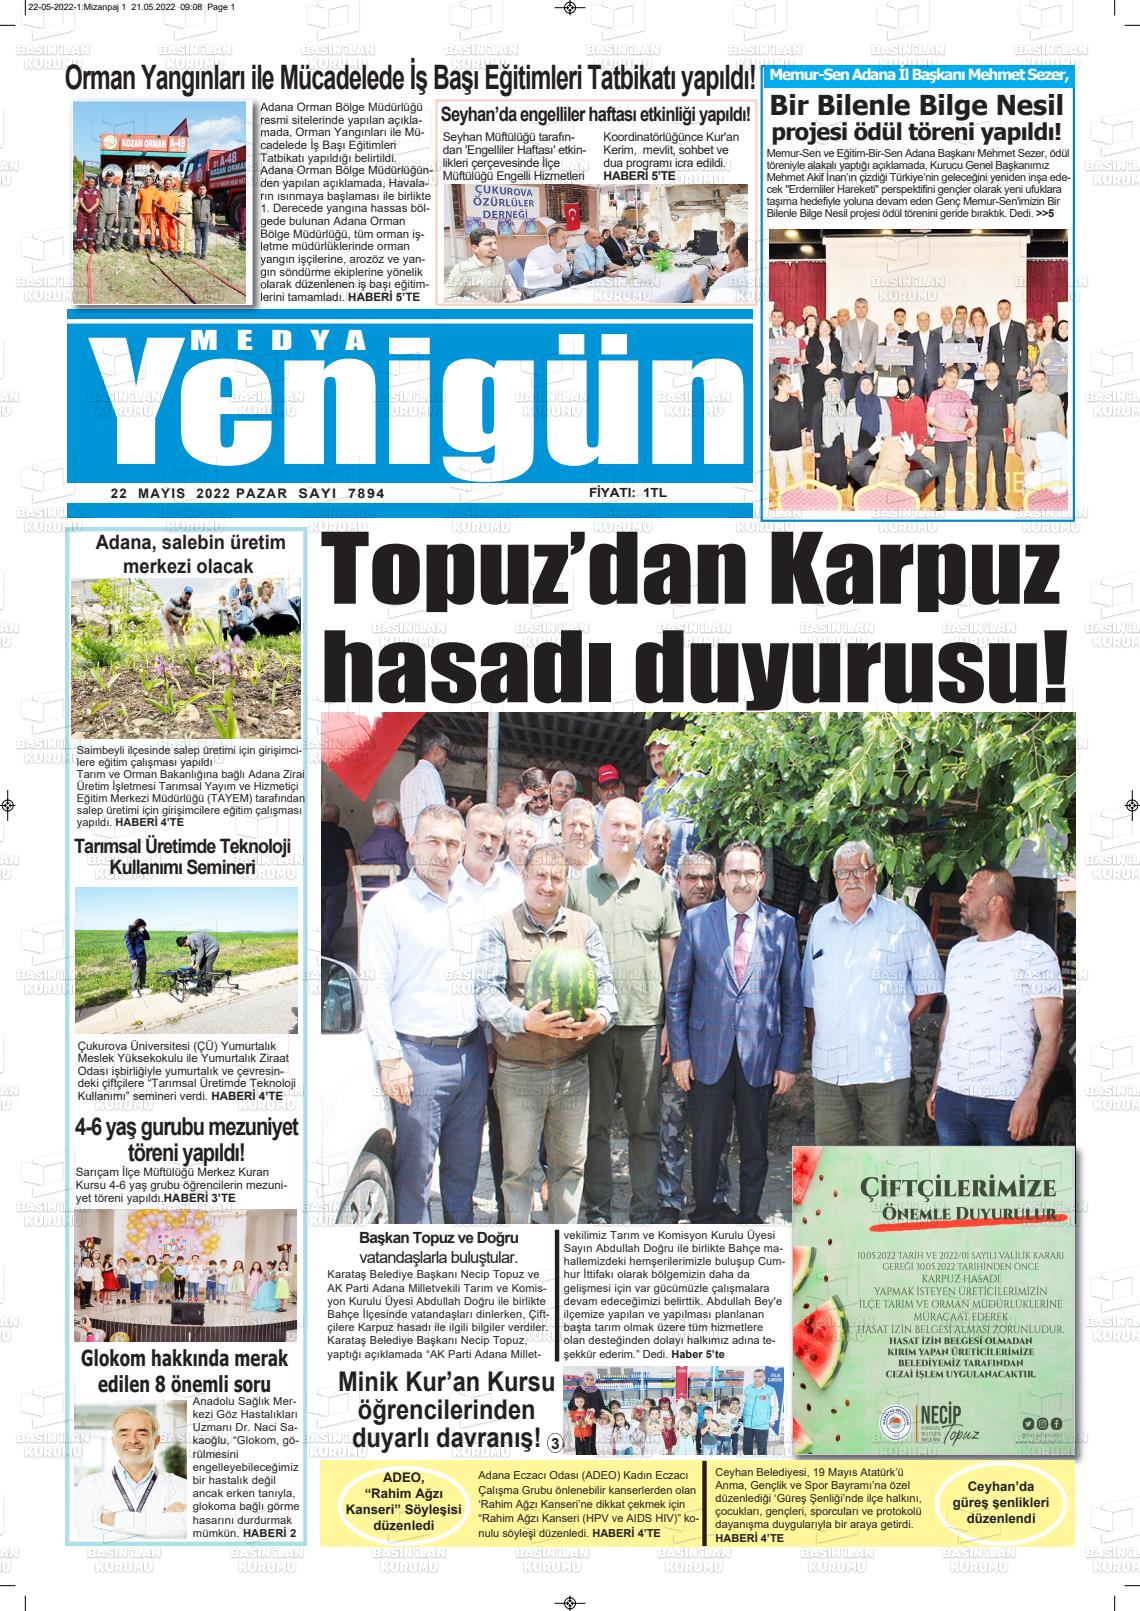 22 Mayıs 2022 Medya Yenigün Gazete Manşeti